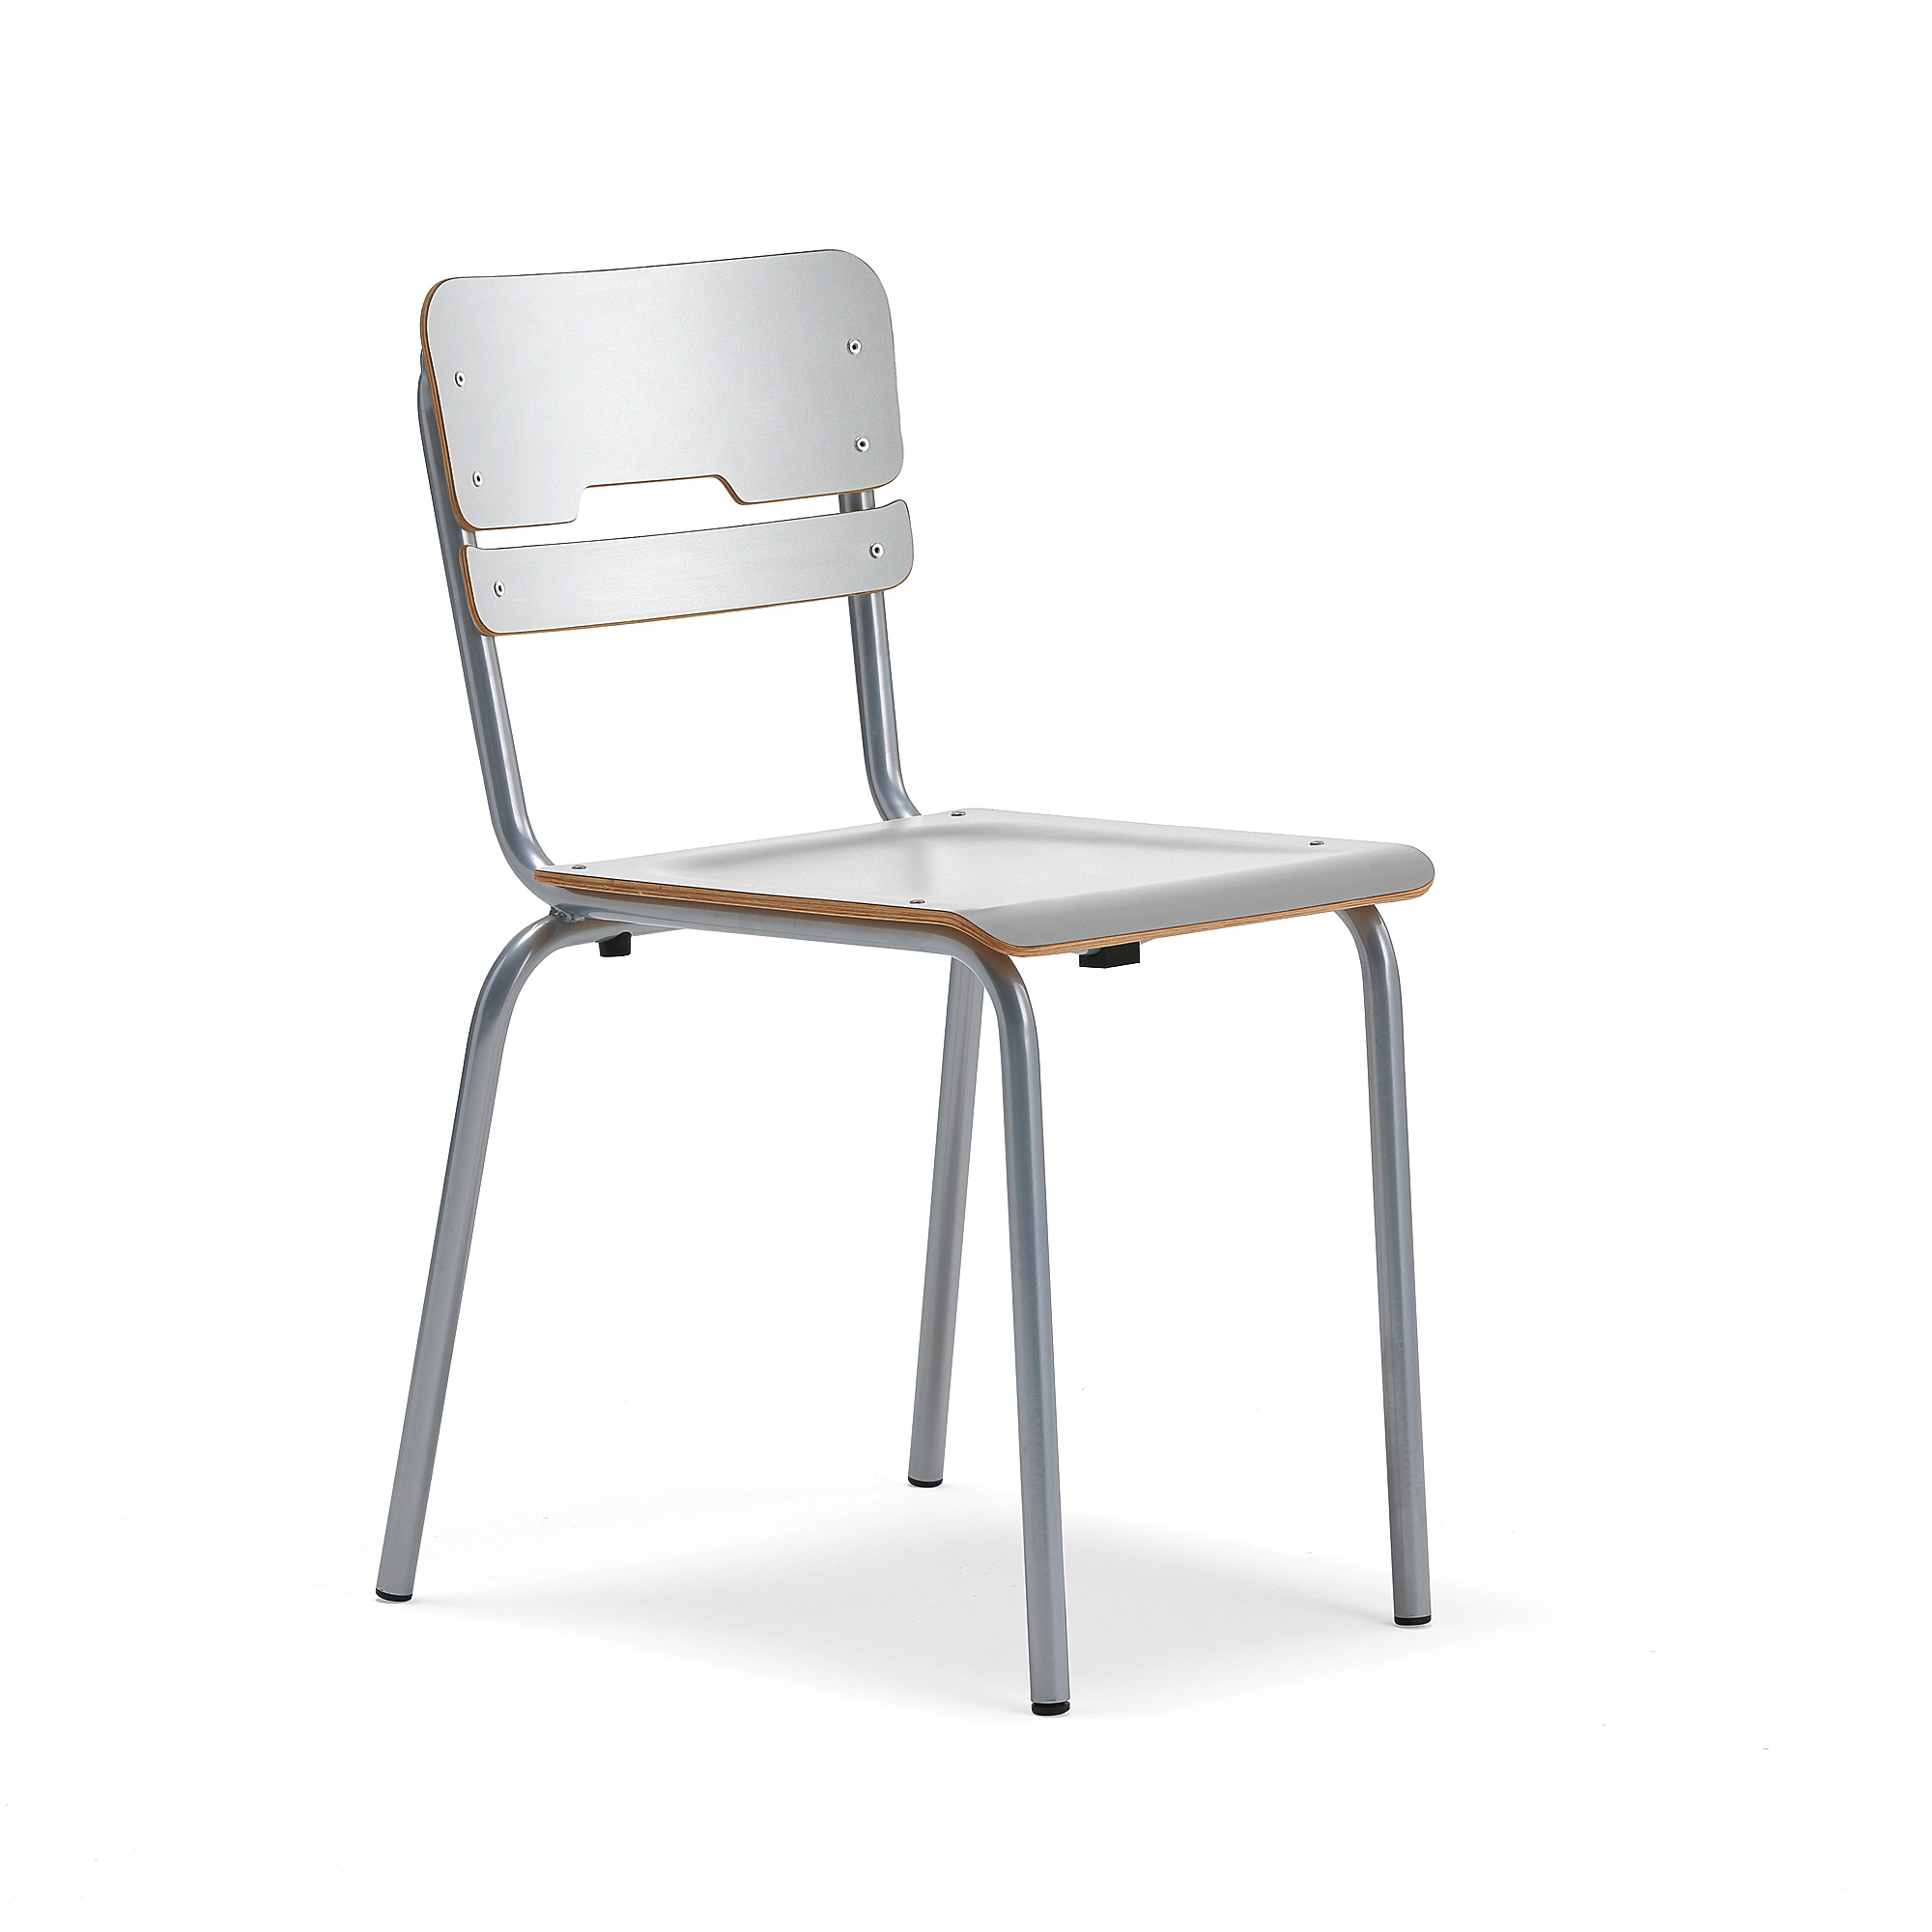 Školní židle SCIENTIA, sedák 390x390 mm, výška 460 mm, stříbrná/šedá